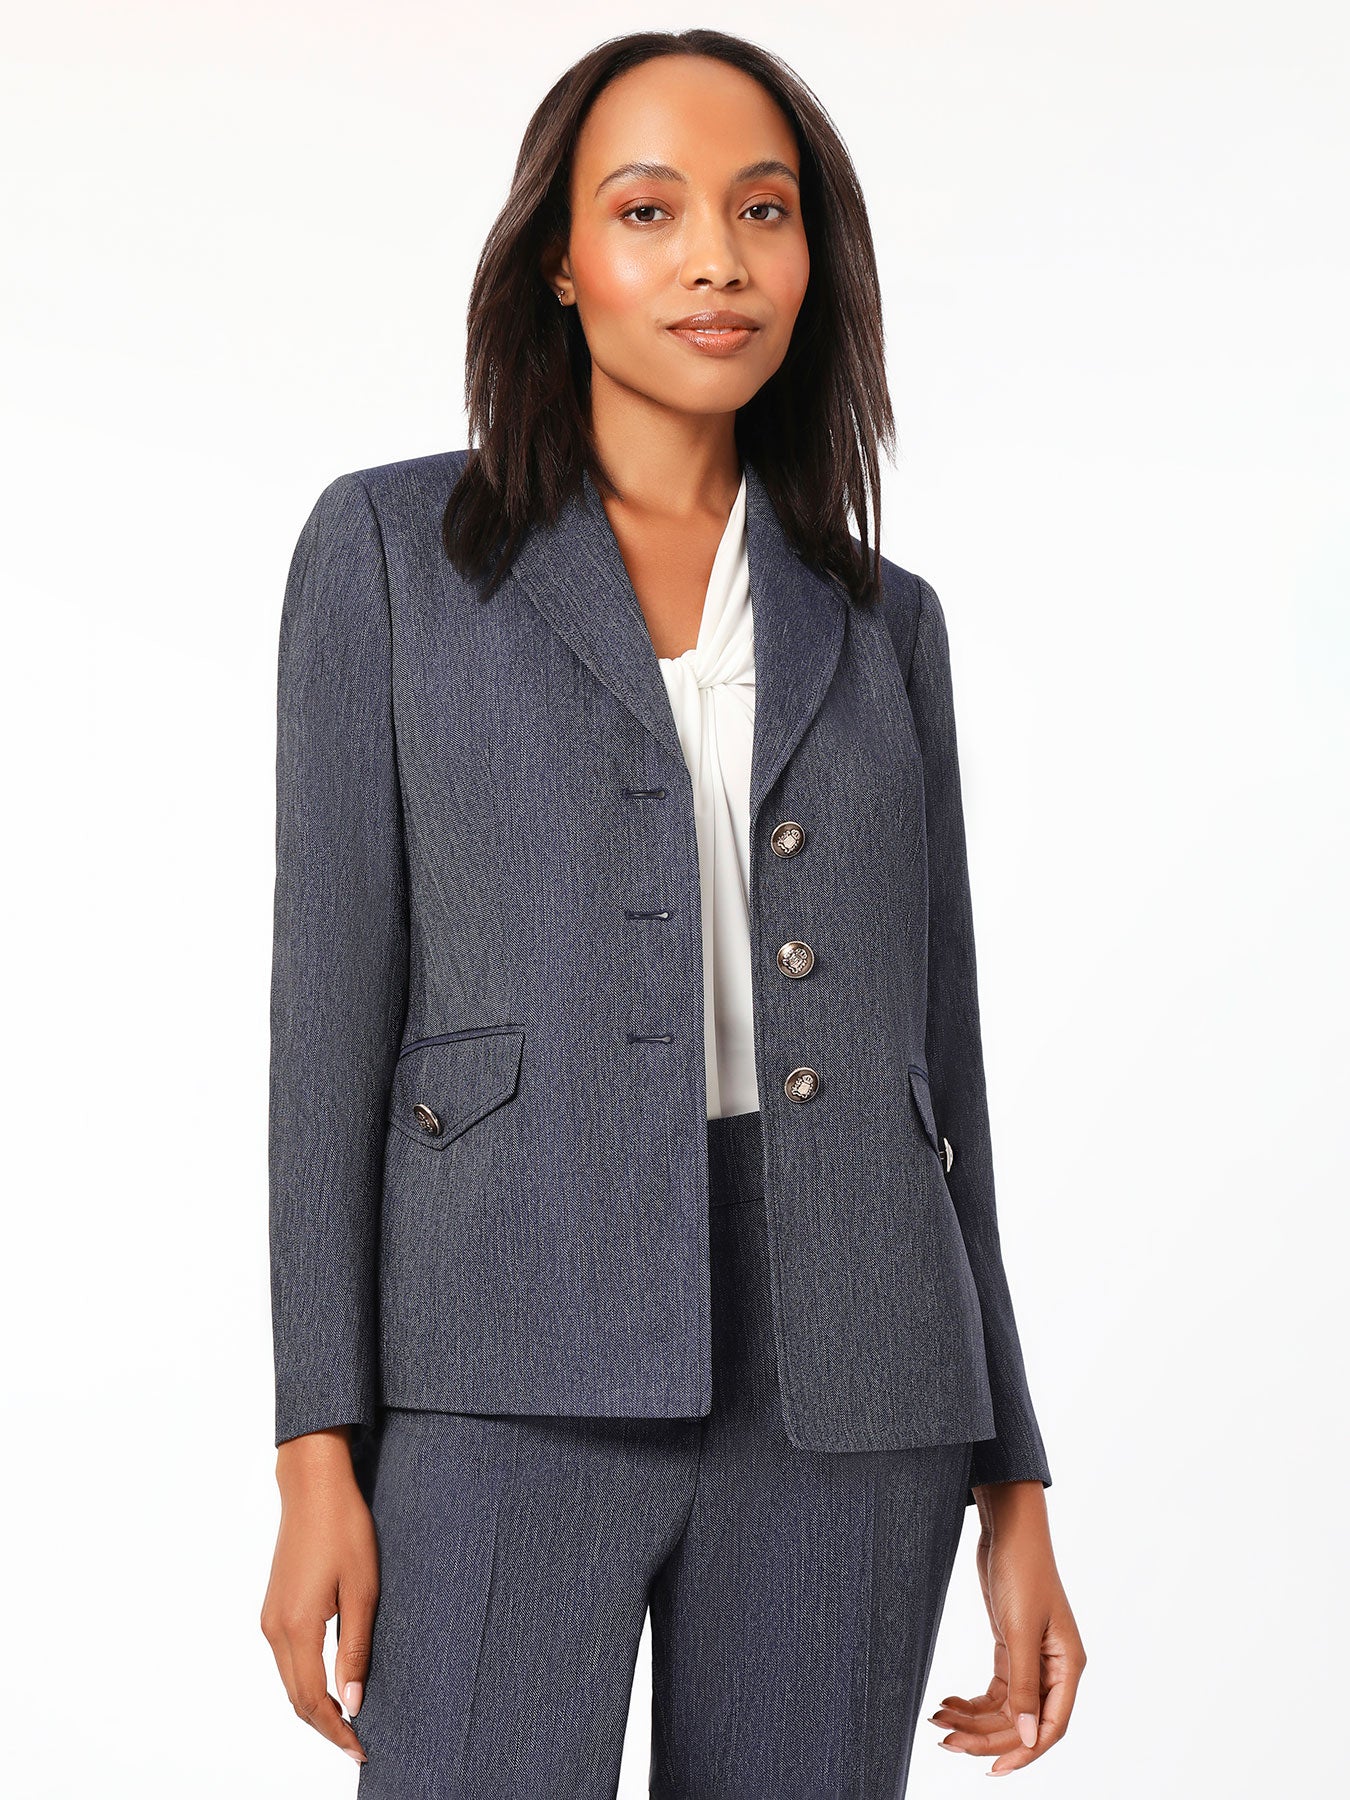 Womens Plus Size Blazer Pant Suits 2 Piece Outfit Dressy Casual Open Front  Blazer and Pants Elegant Business Suit Sets